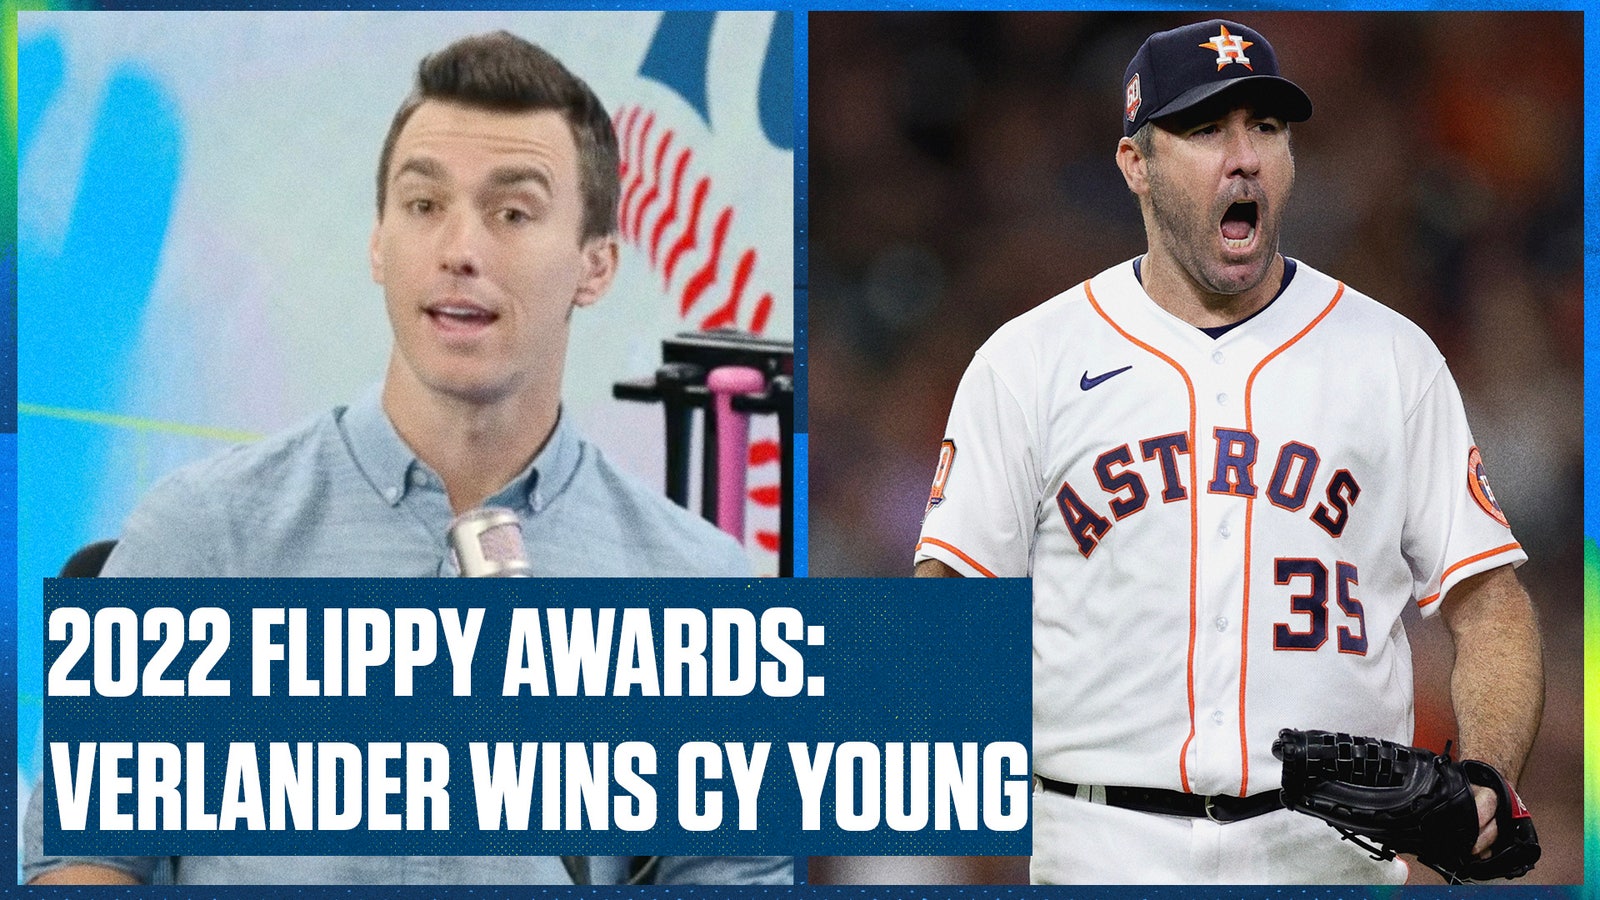 Astros' Justin Verlander wins Cy Young award at 2022 Flippy Awards